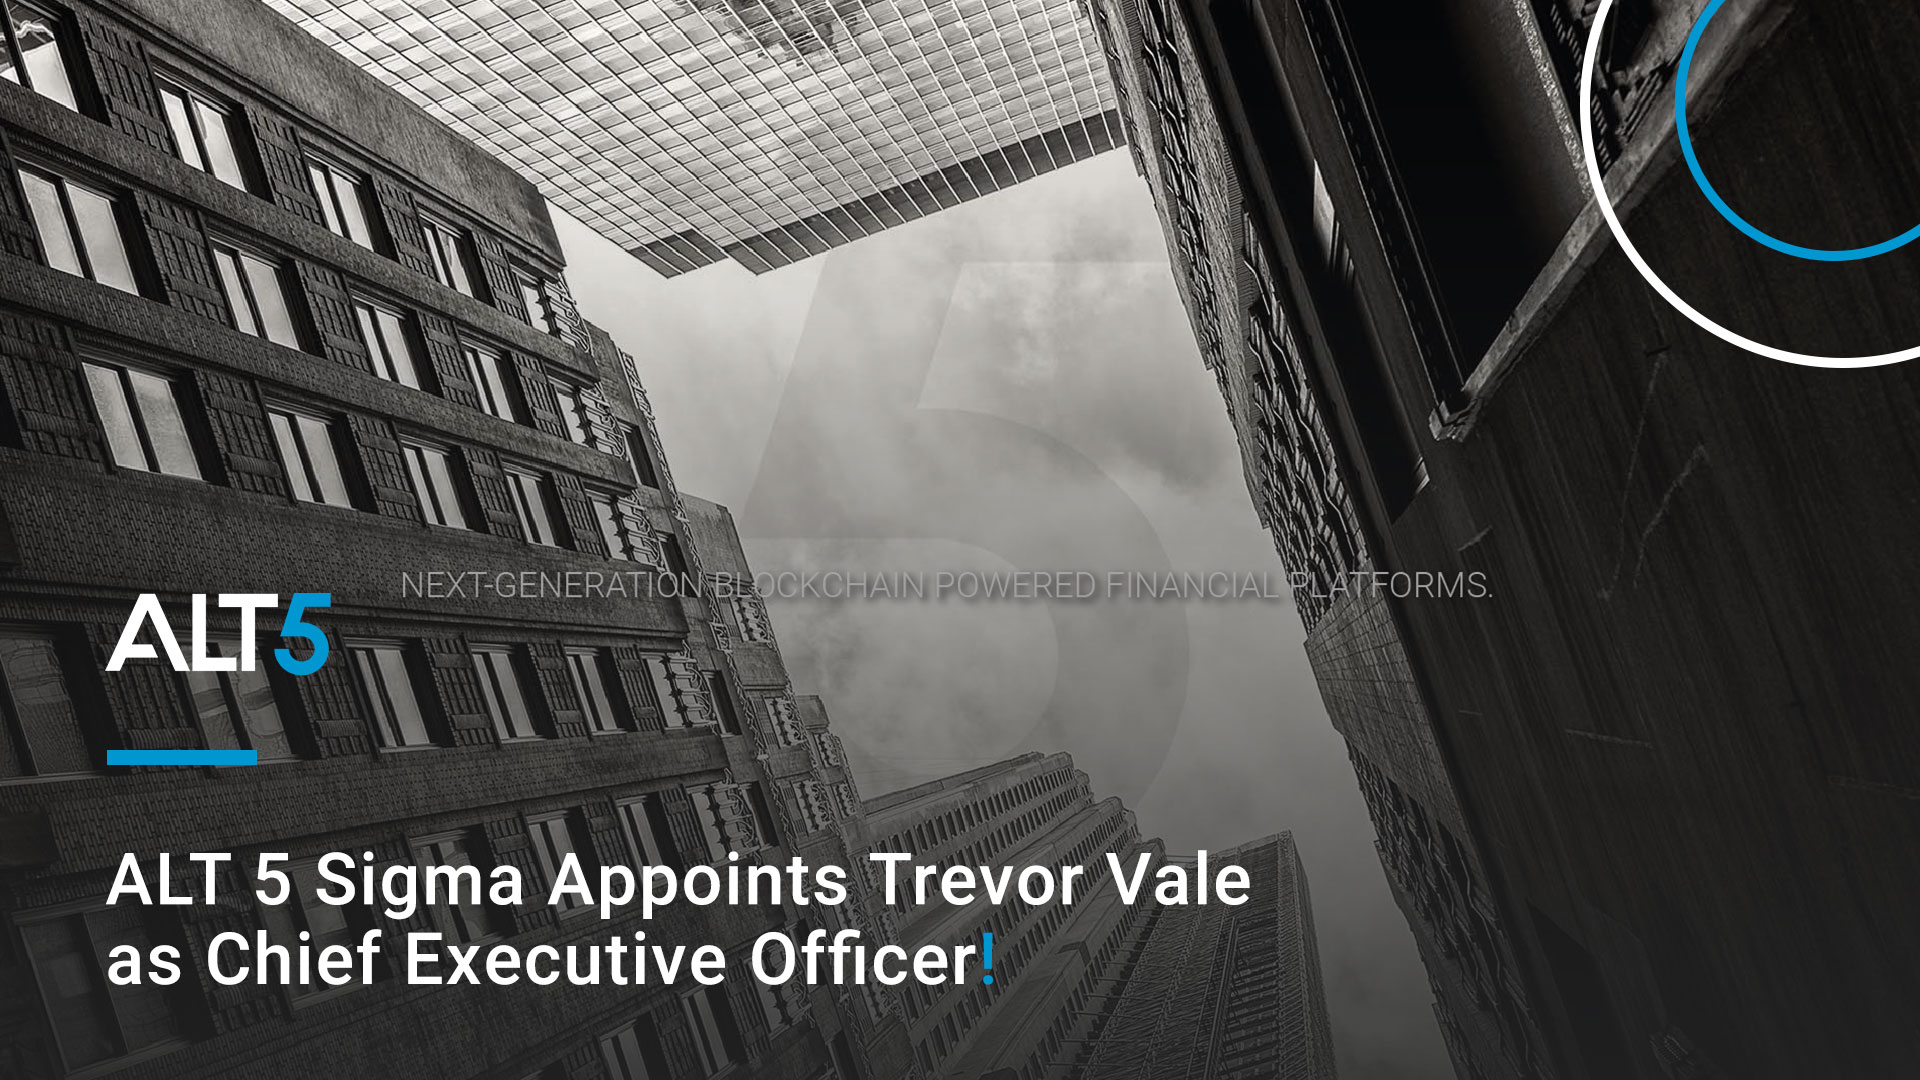 Press Release: ALT Sigma appoints Trevor Vale as CEO